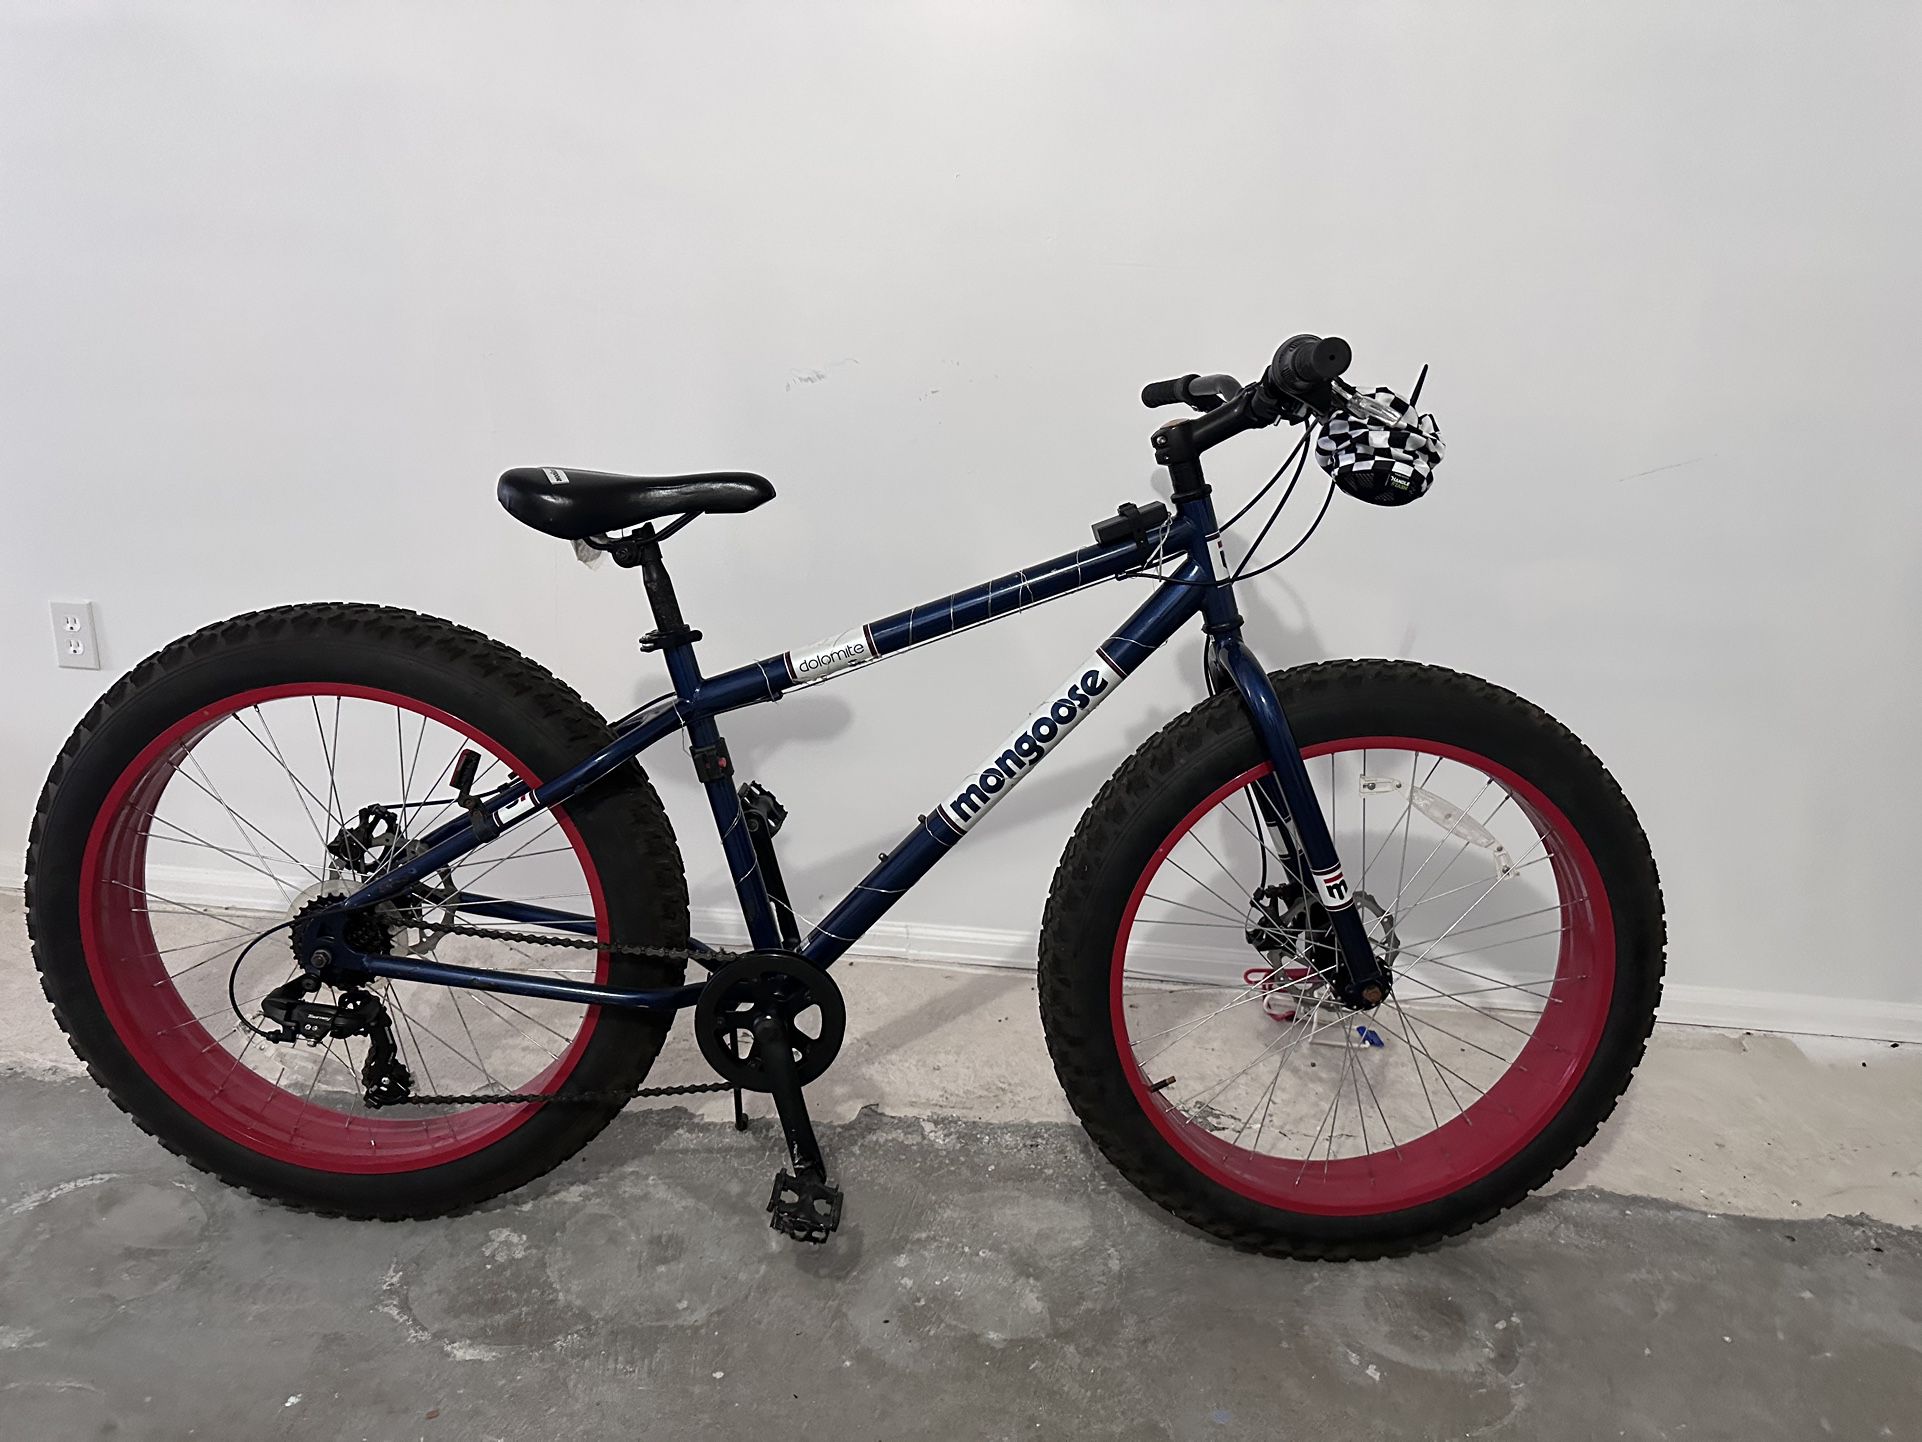 Mongoose fat bike for sale $300 OBO